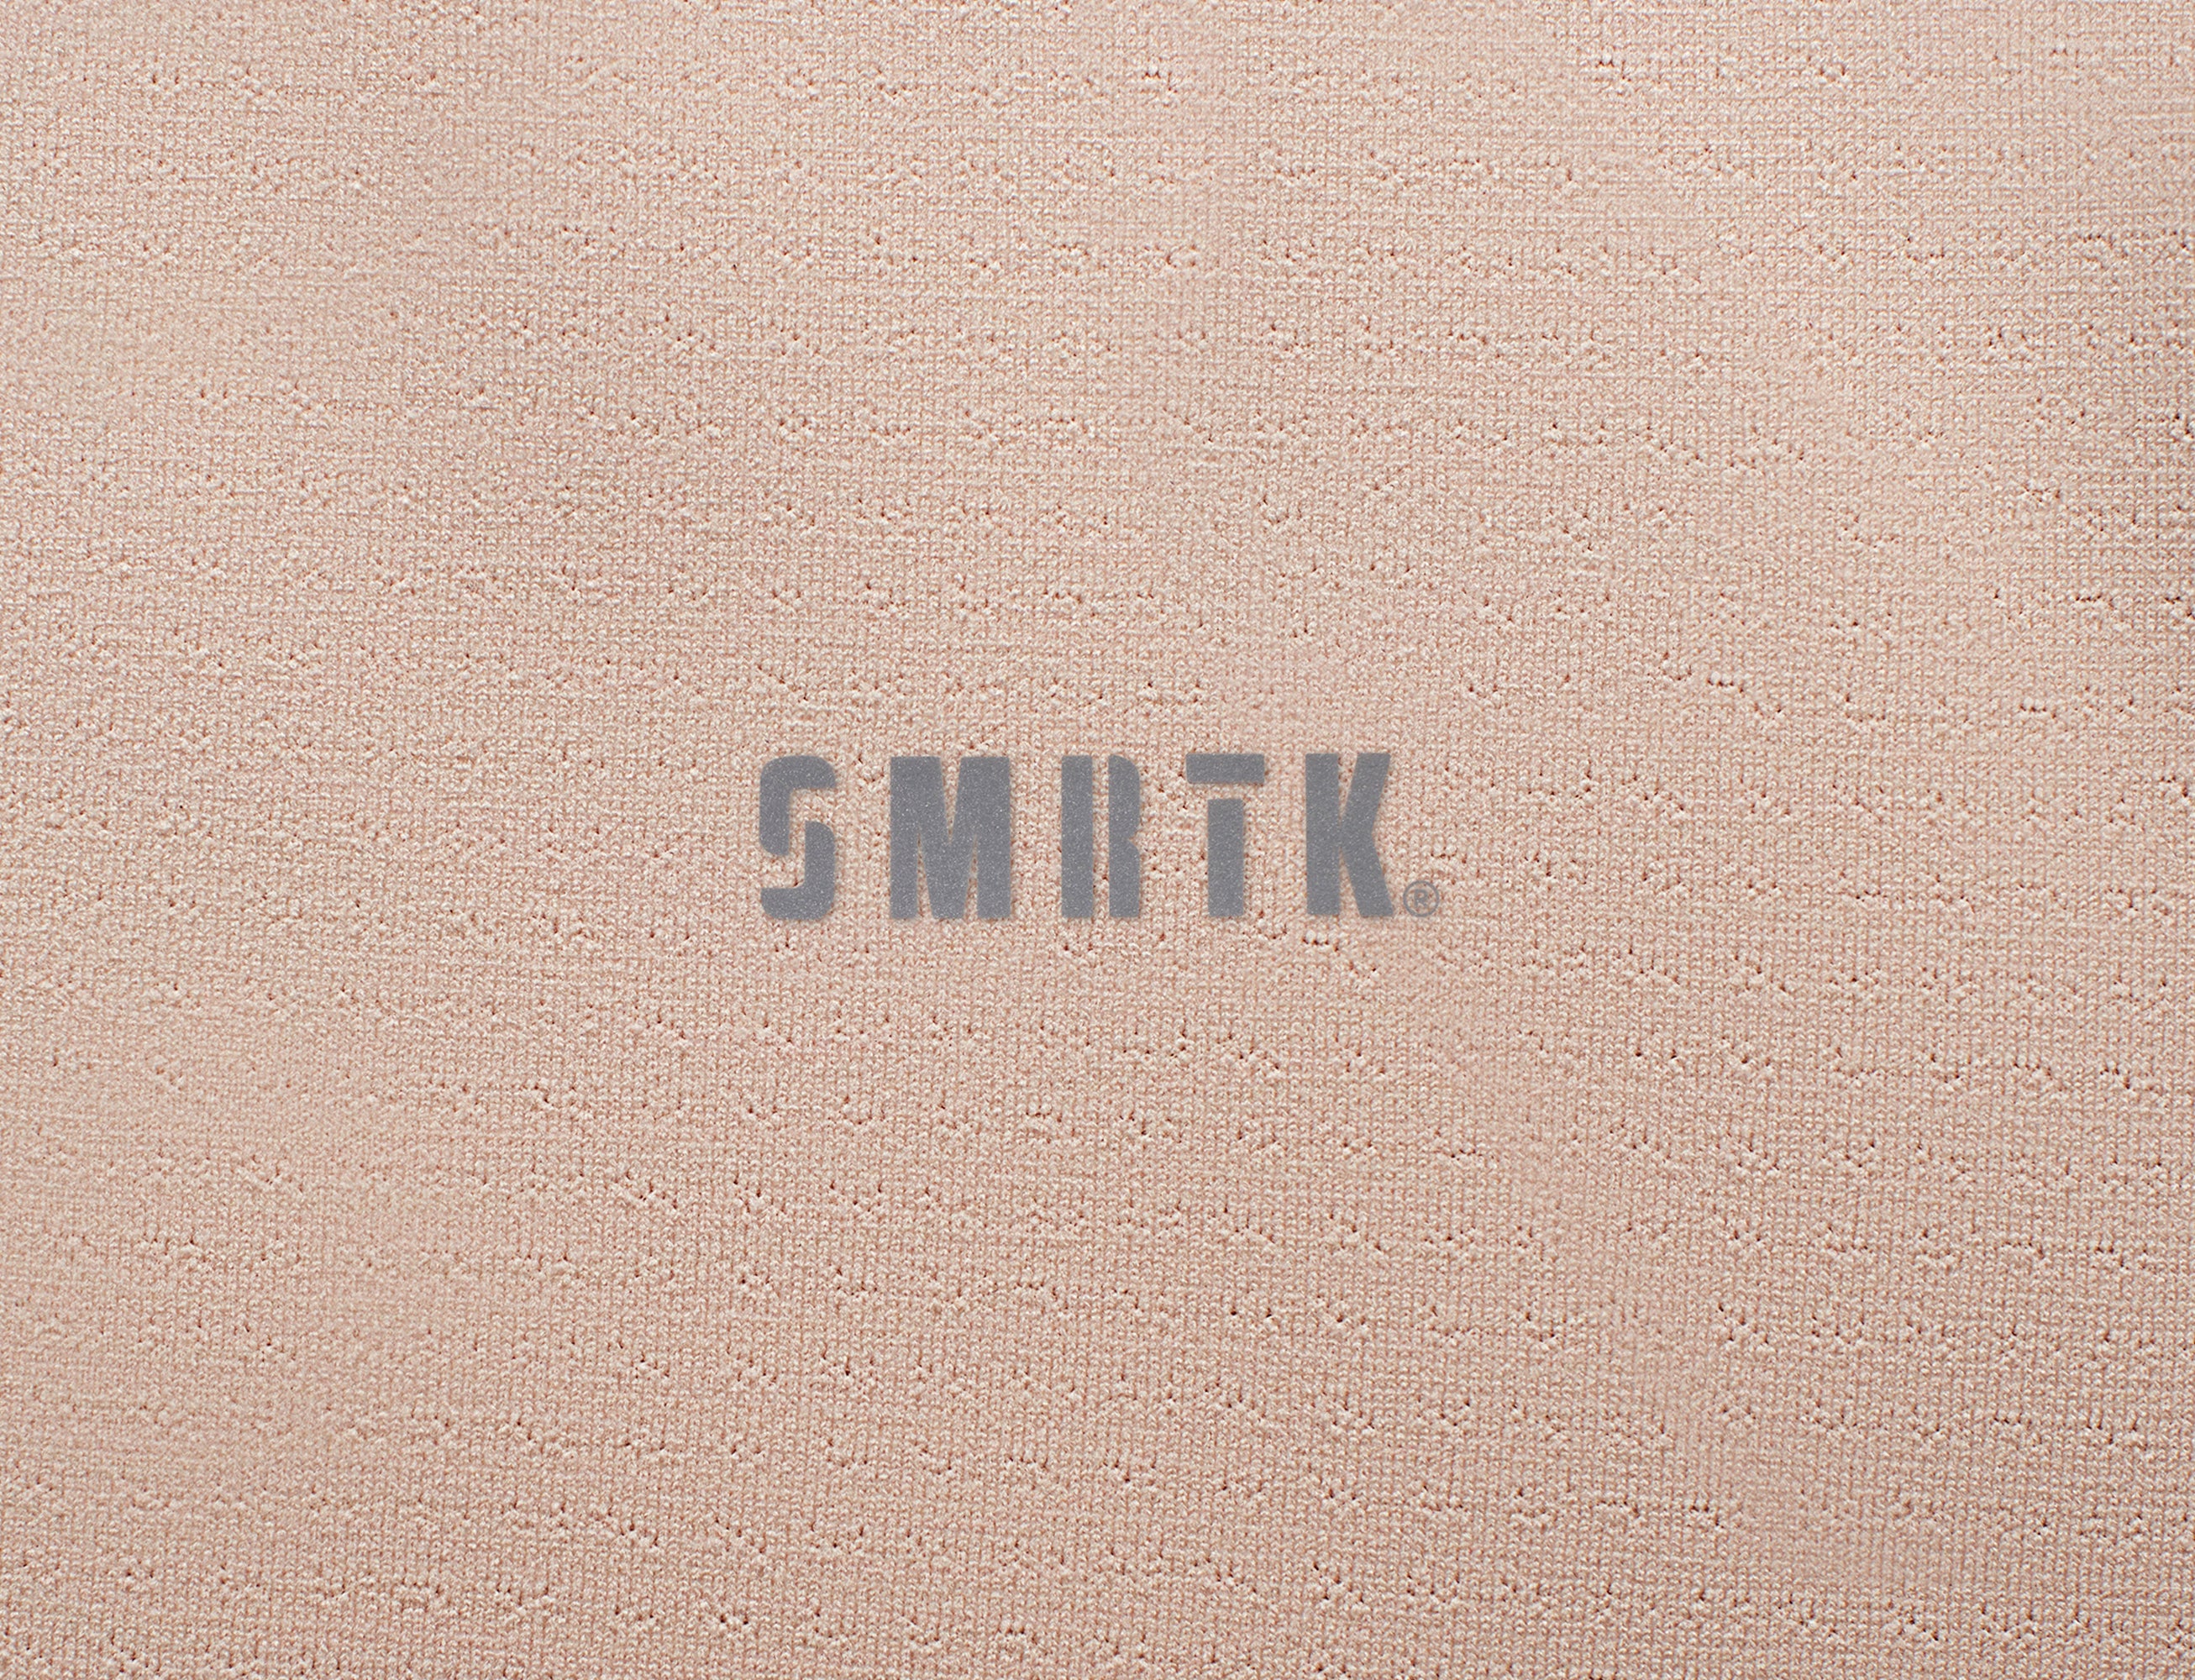 SMRTK Short Sleeve Performance Tee (3 pack)